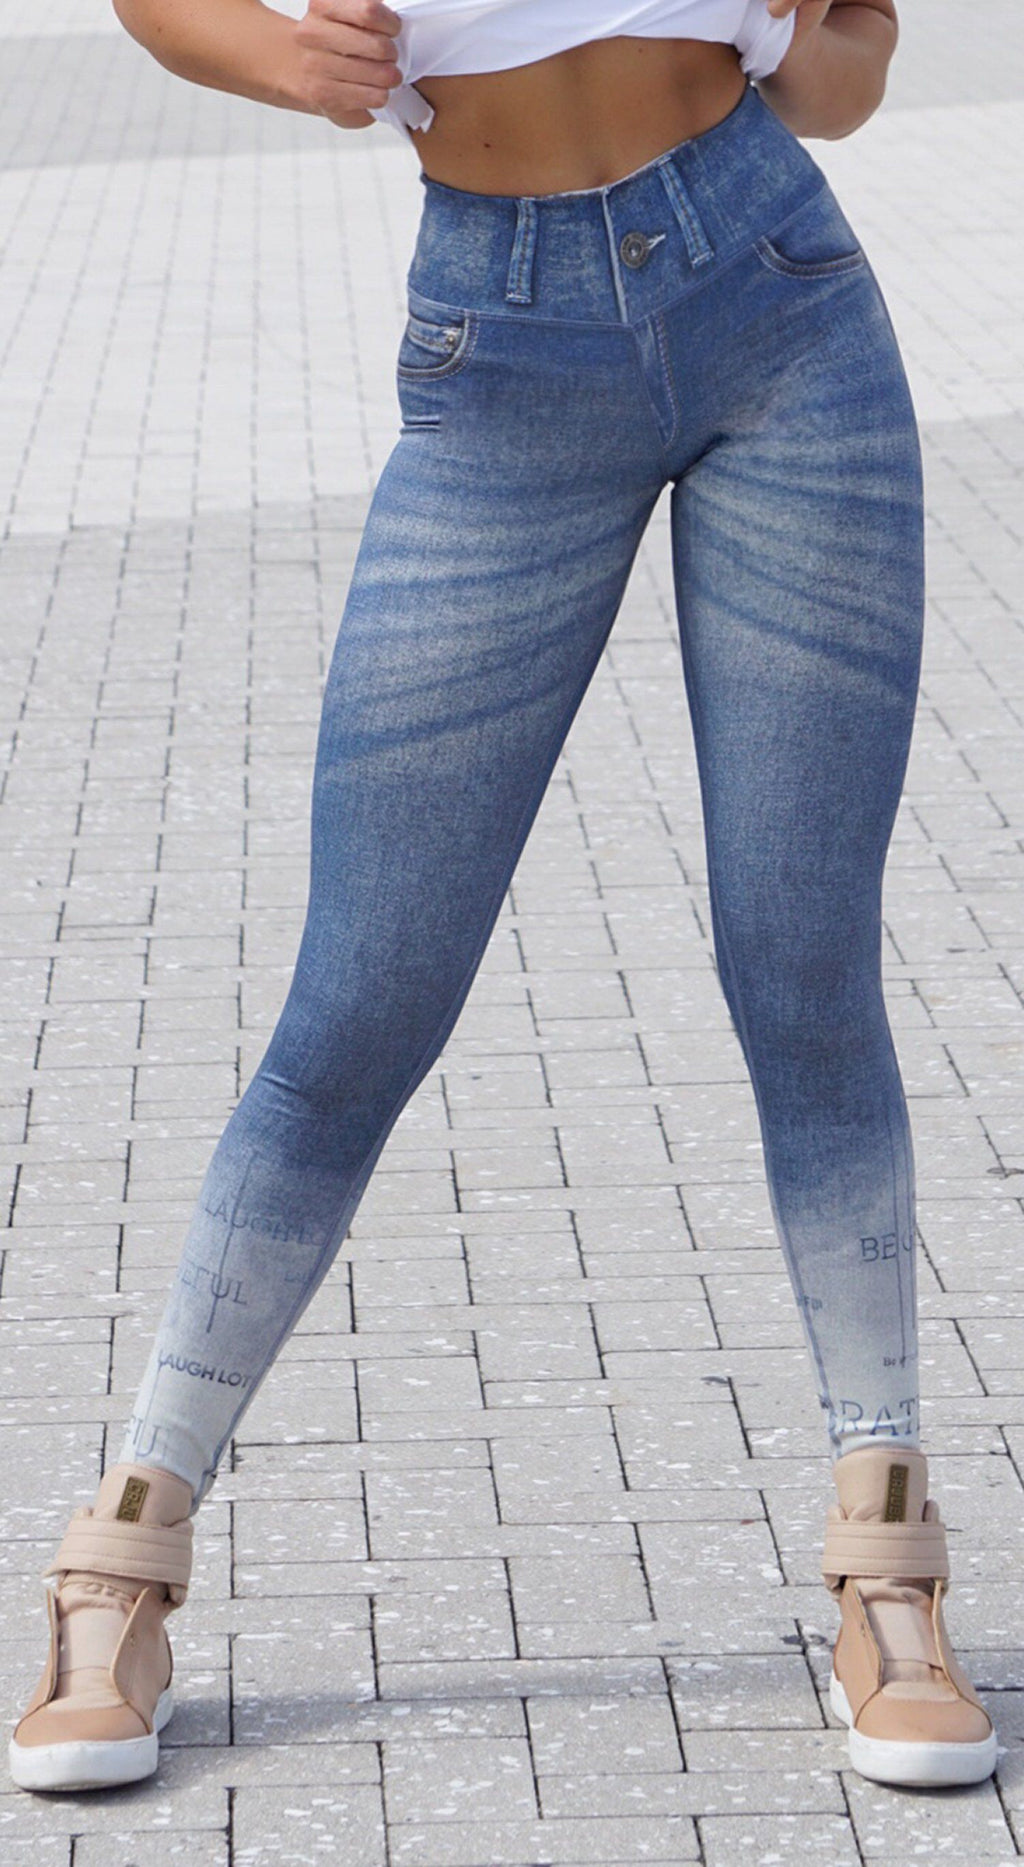 Shop Top | Rio Grateful Reversible Jeans Fake Sublime Legging | Print Brazilian